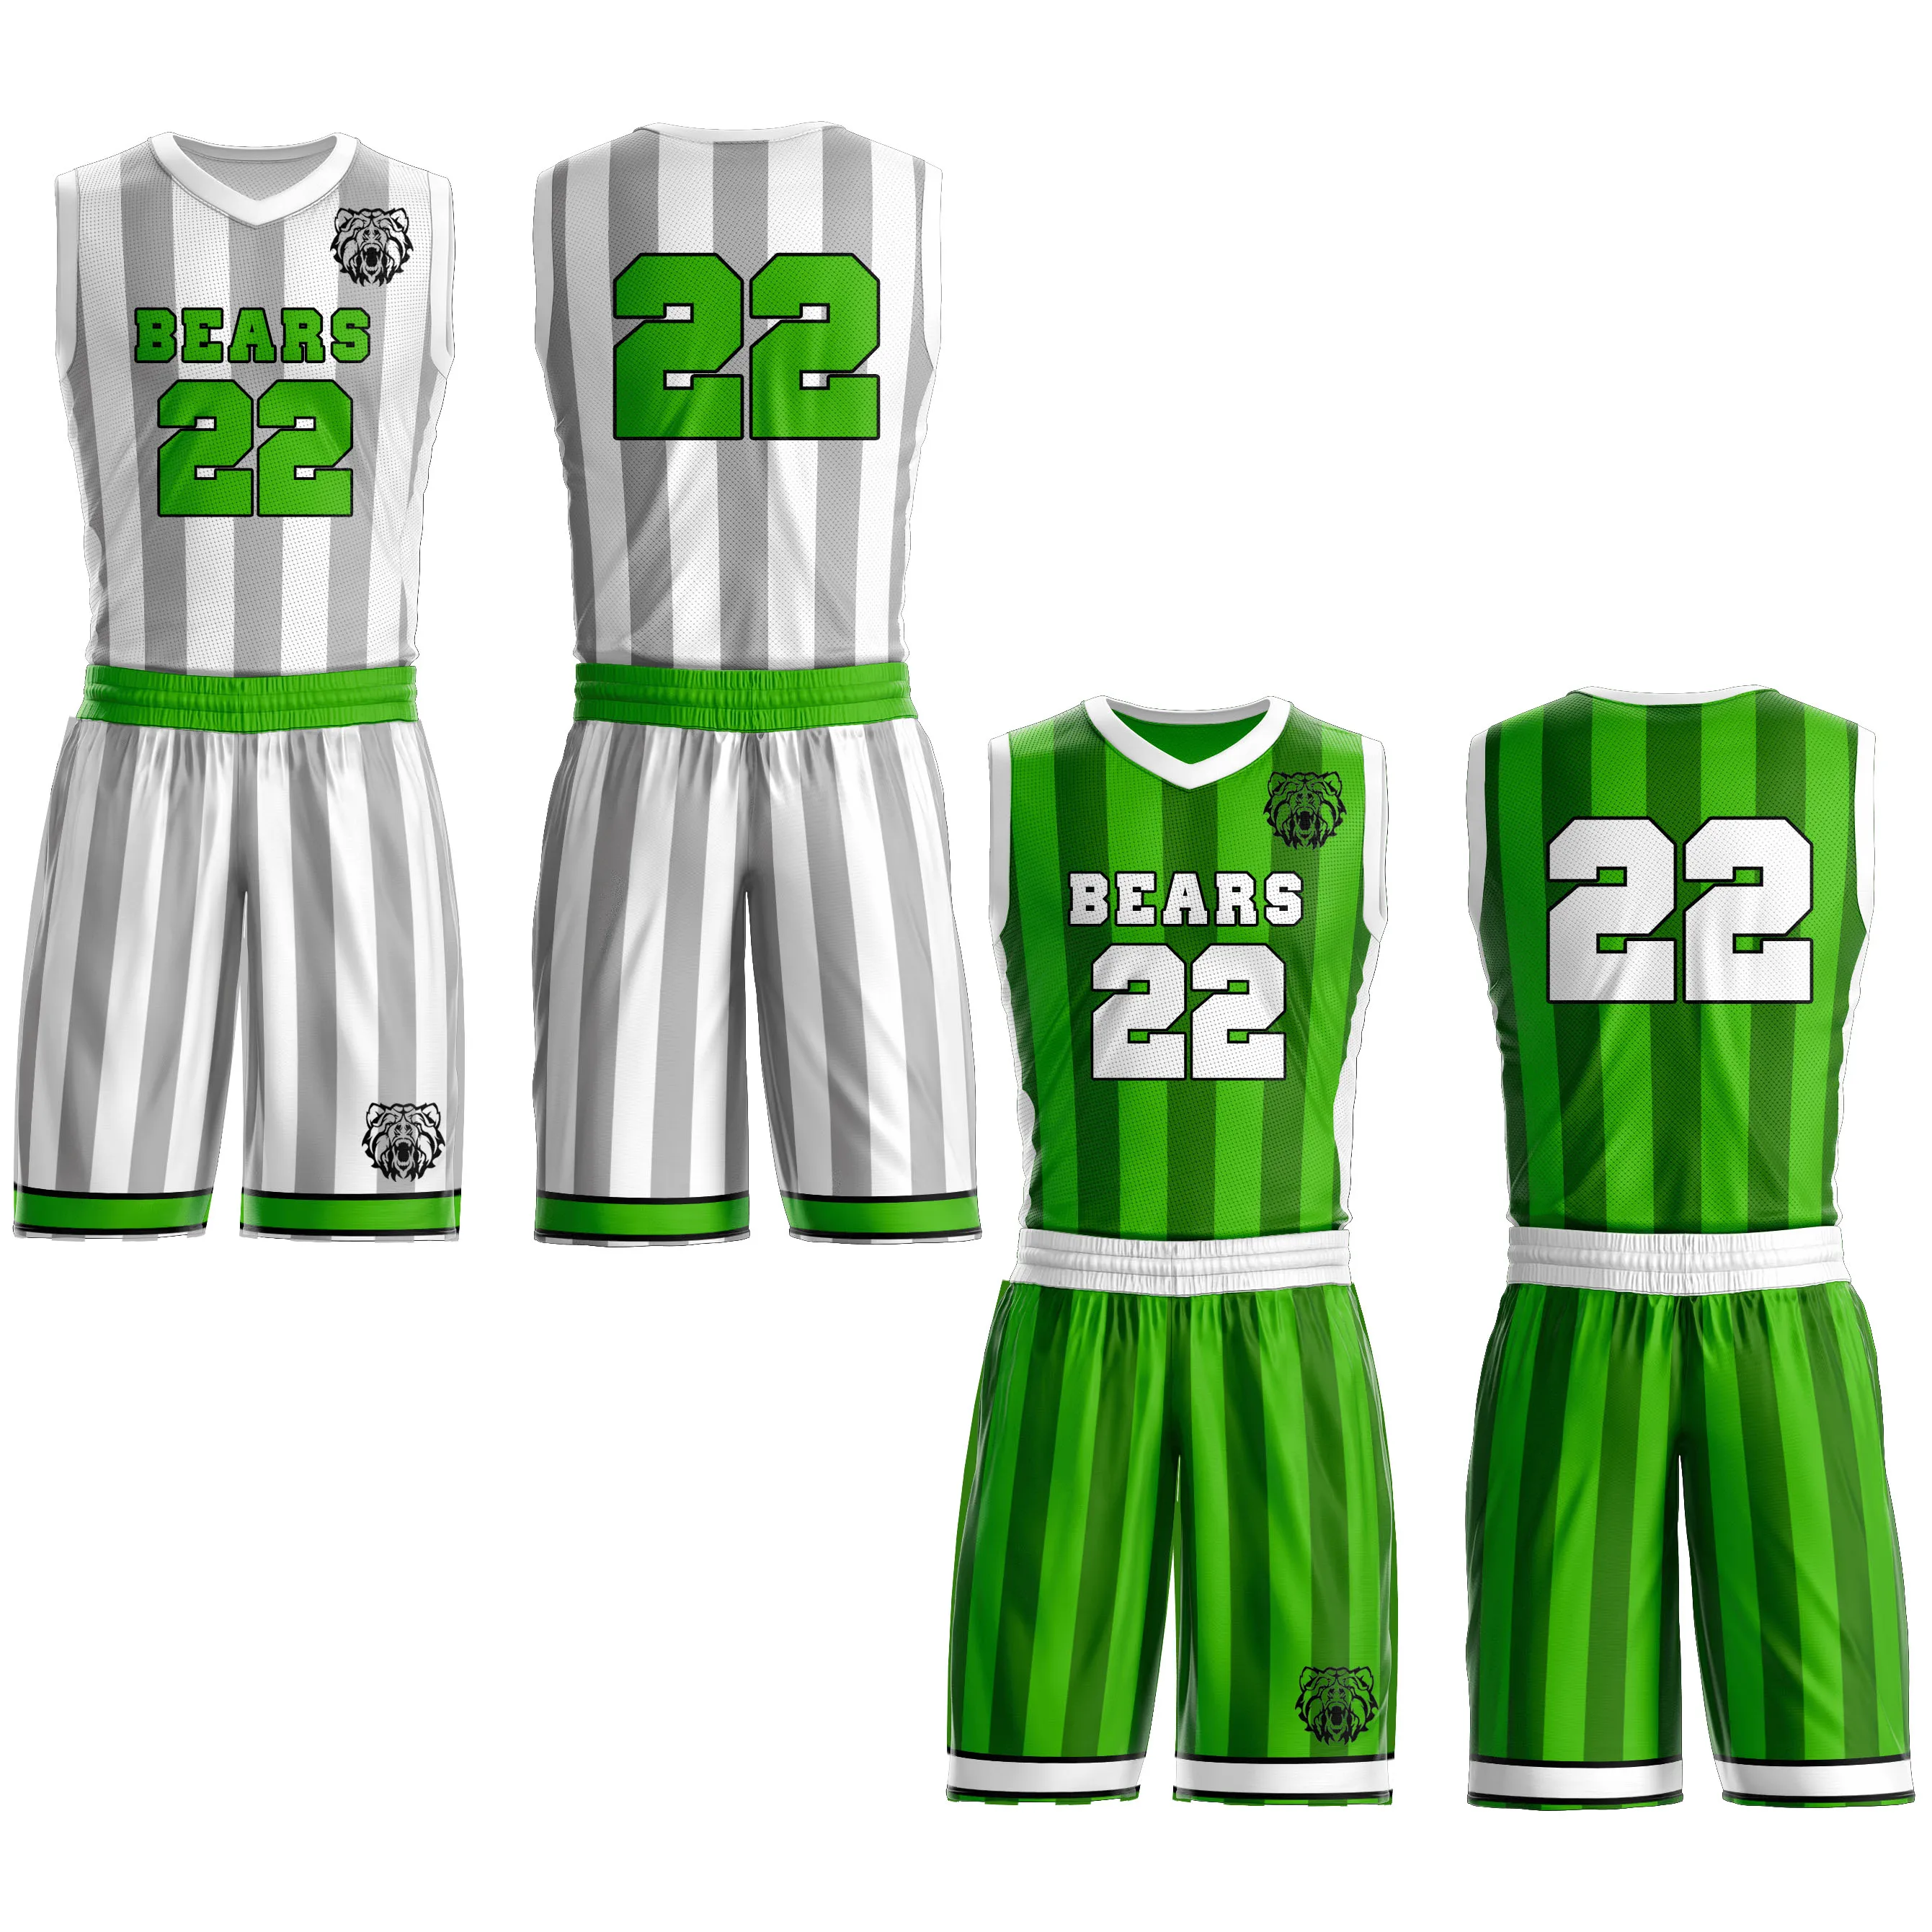 Custom Youth Basketball Uniforms & Youth Basketball Jerseys